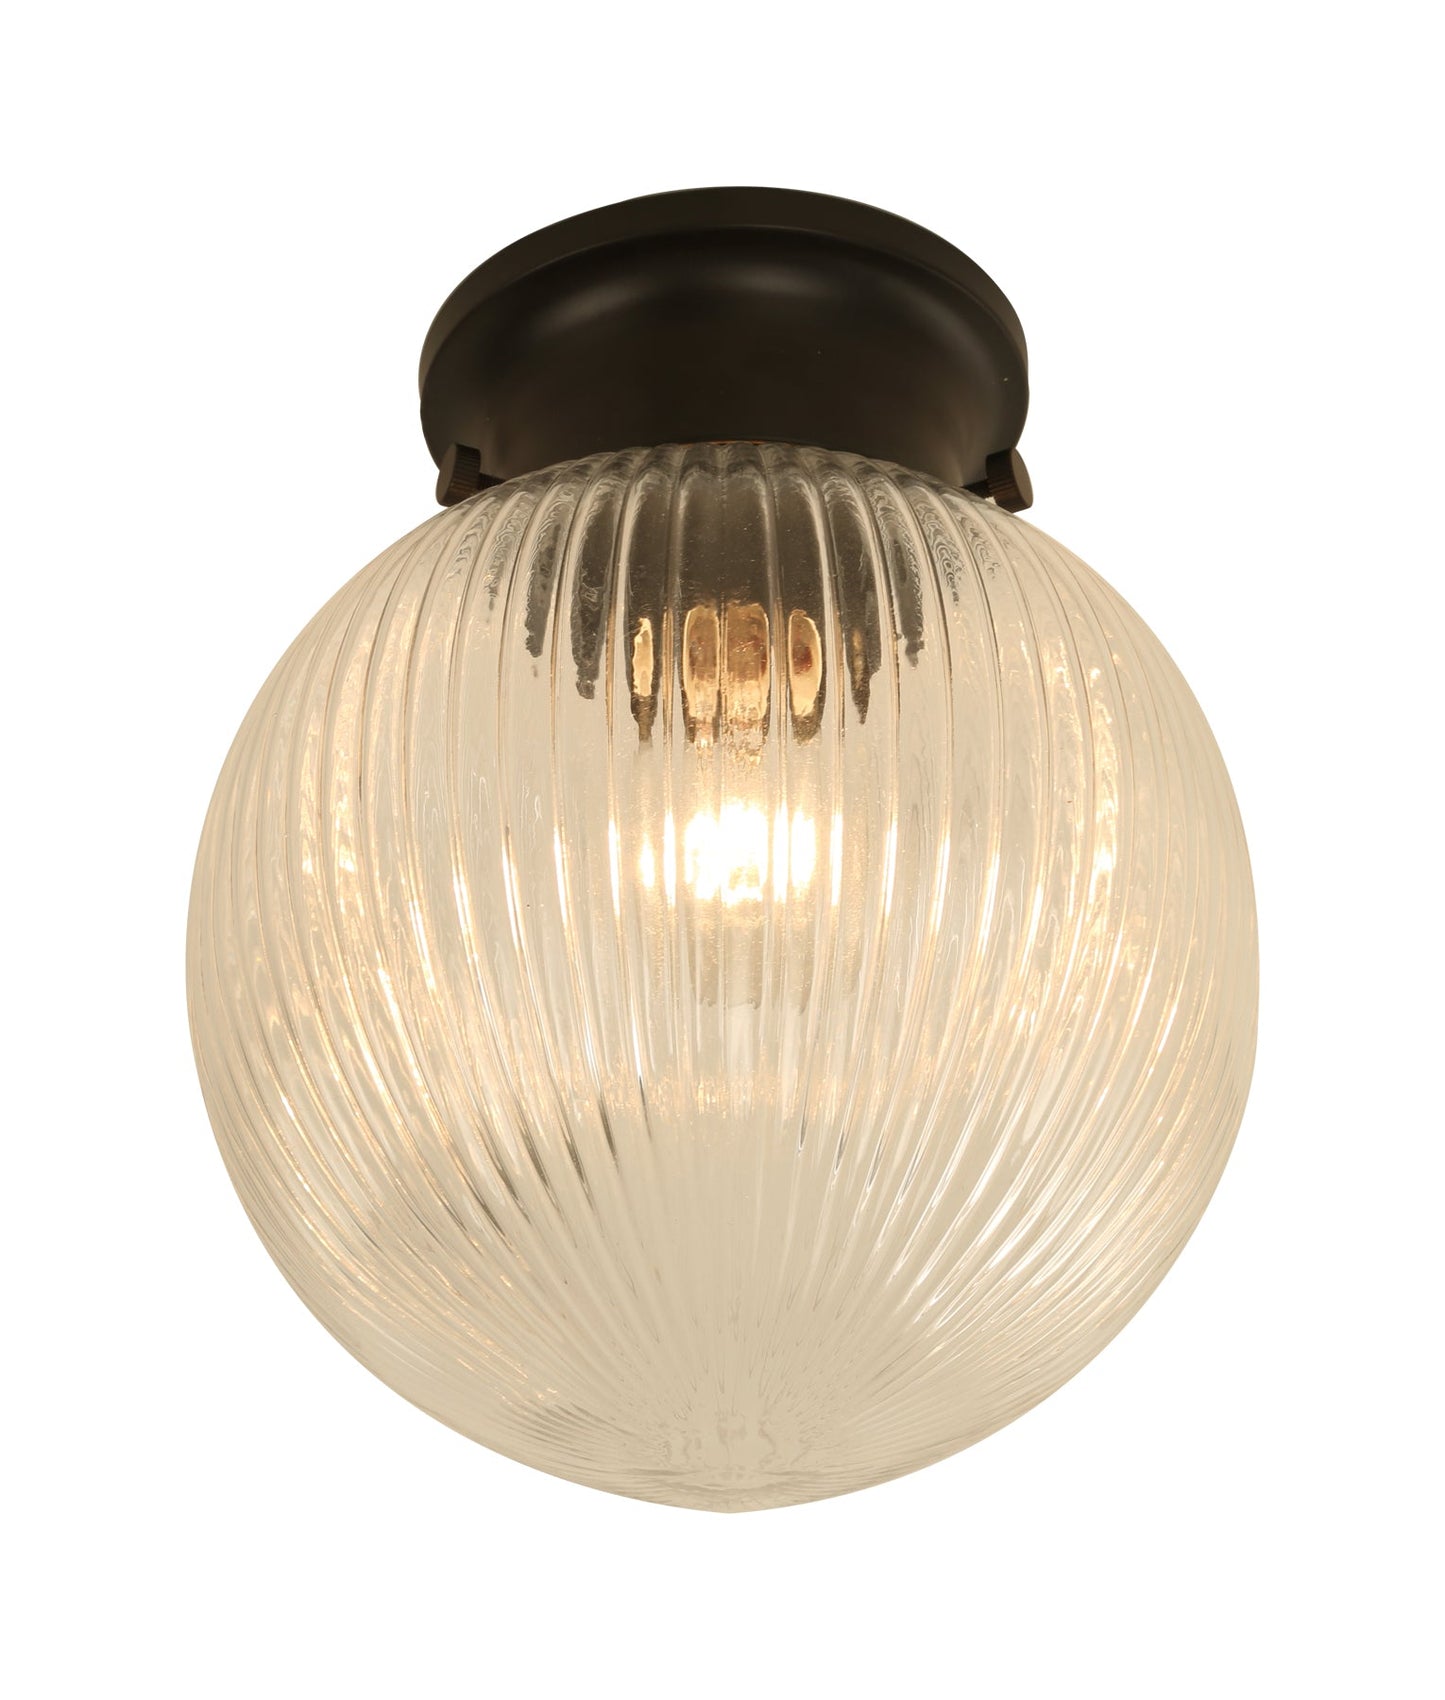 D.I.Y. Batten Fix Ceiling Lights - Large Spherical Ribbed Shape Fixtures